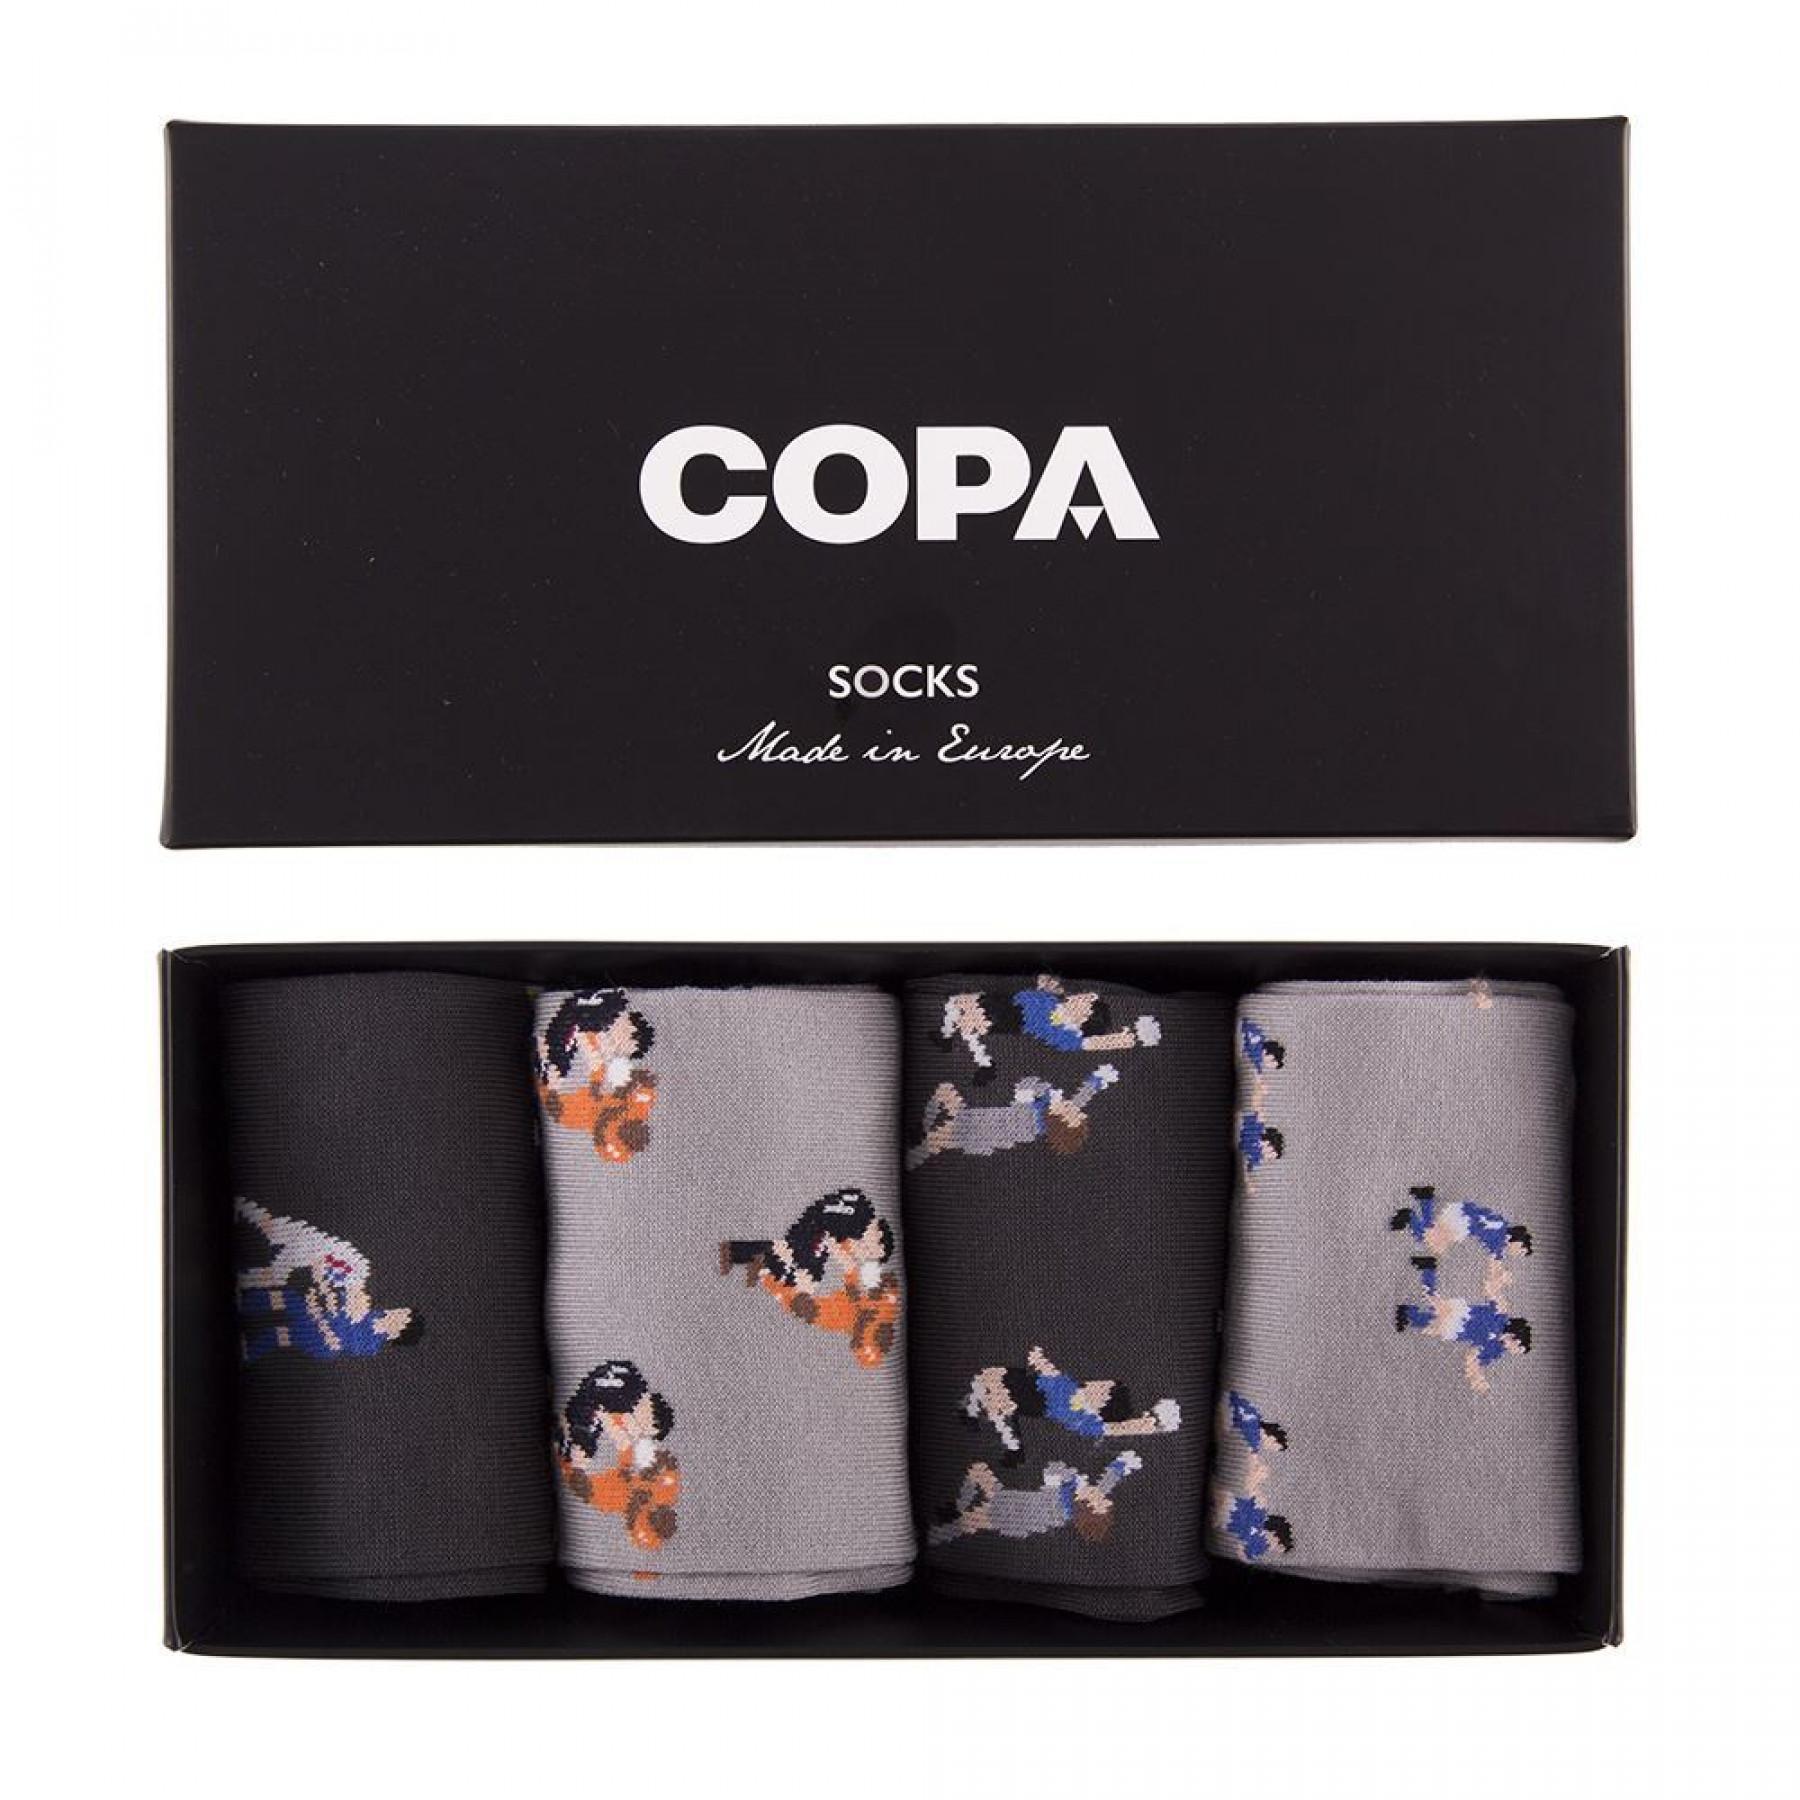 Satz mit 4 Paar Copa-Weltcup-Socken